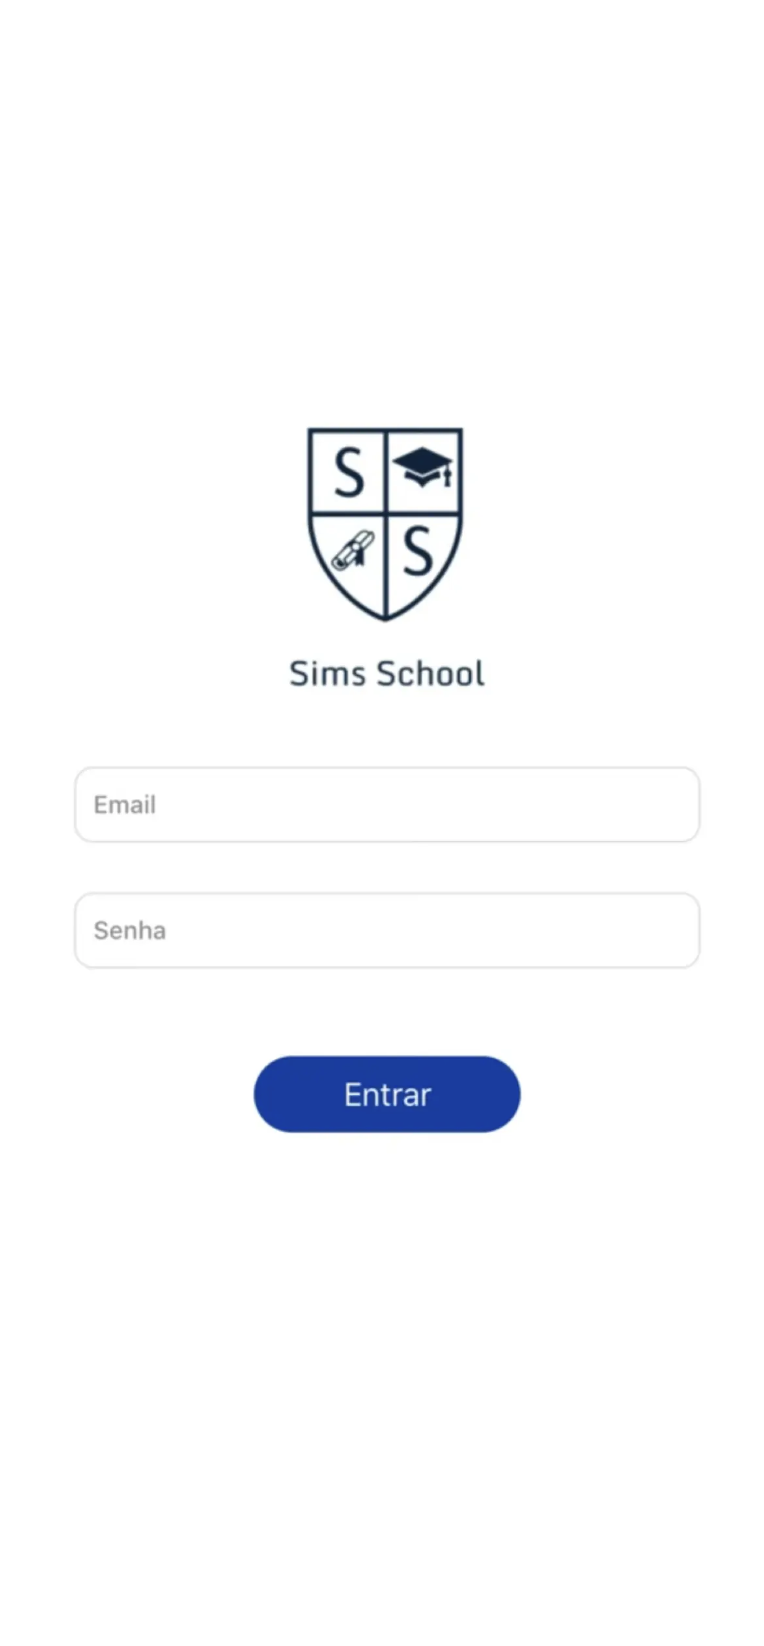 Sims School